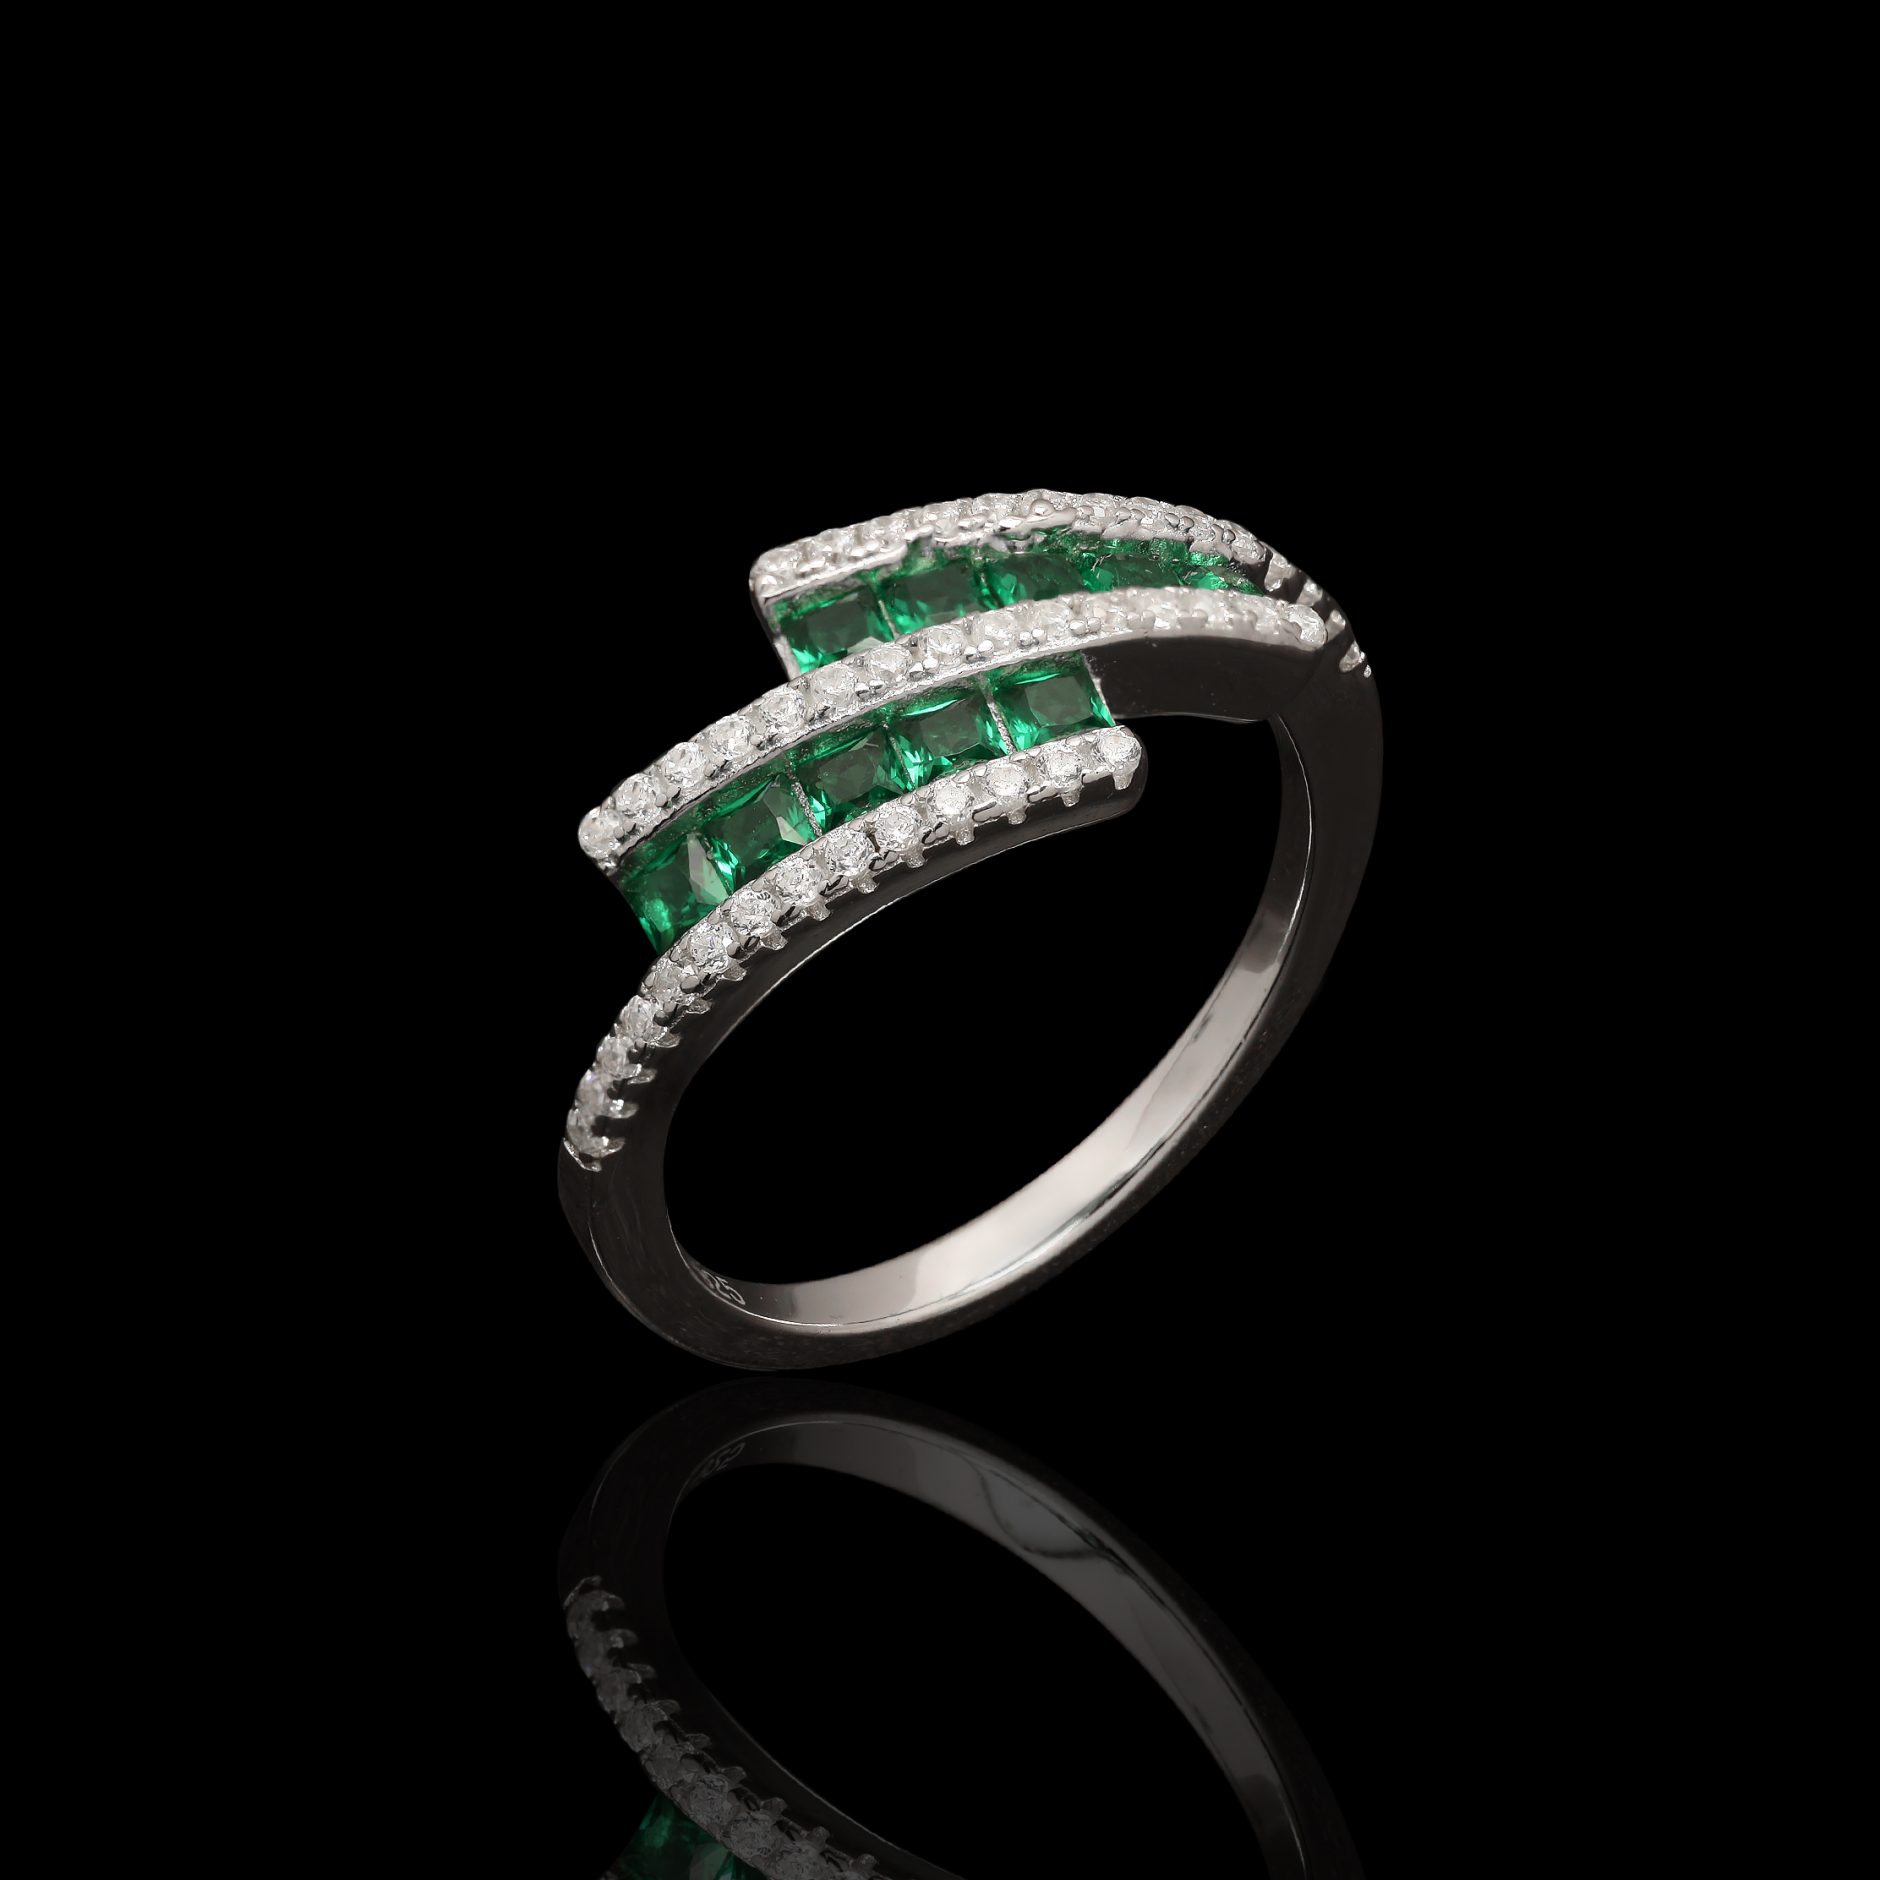 Afill tower bottoms green stone ring diamonds for men